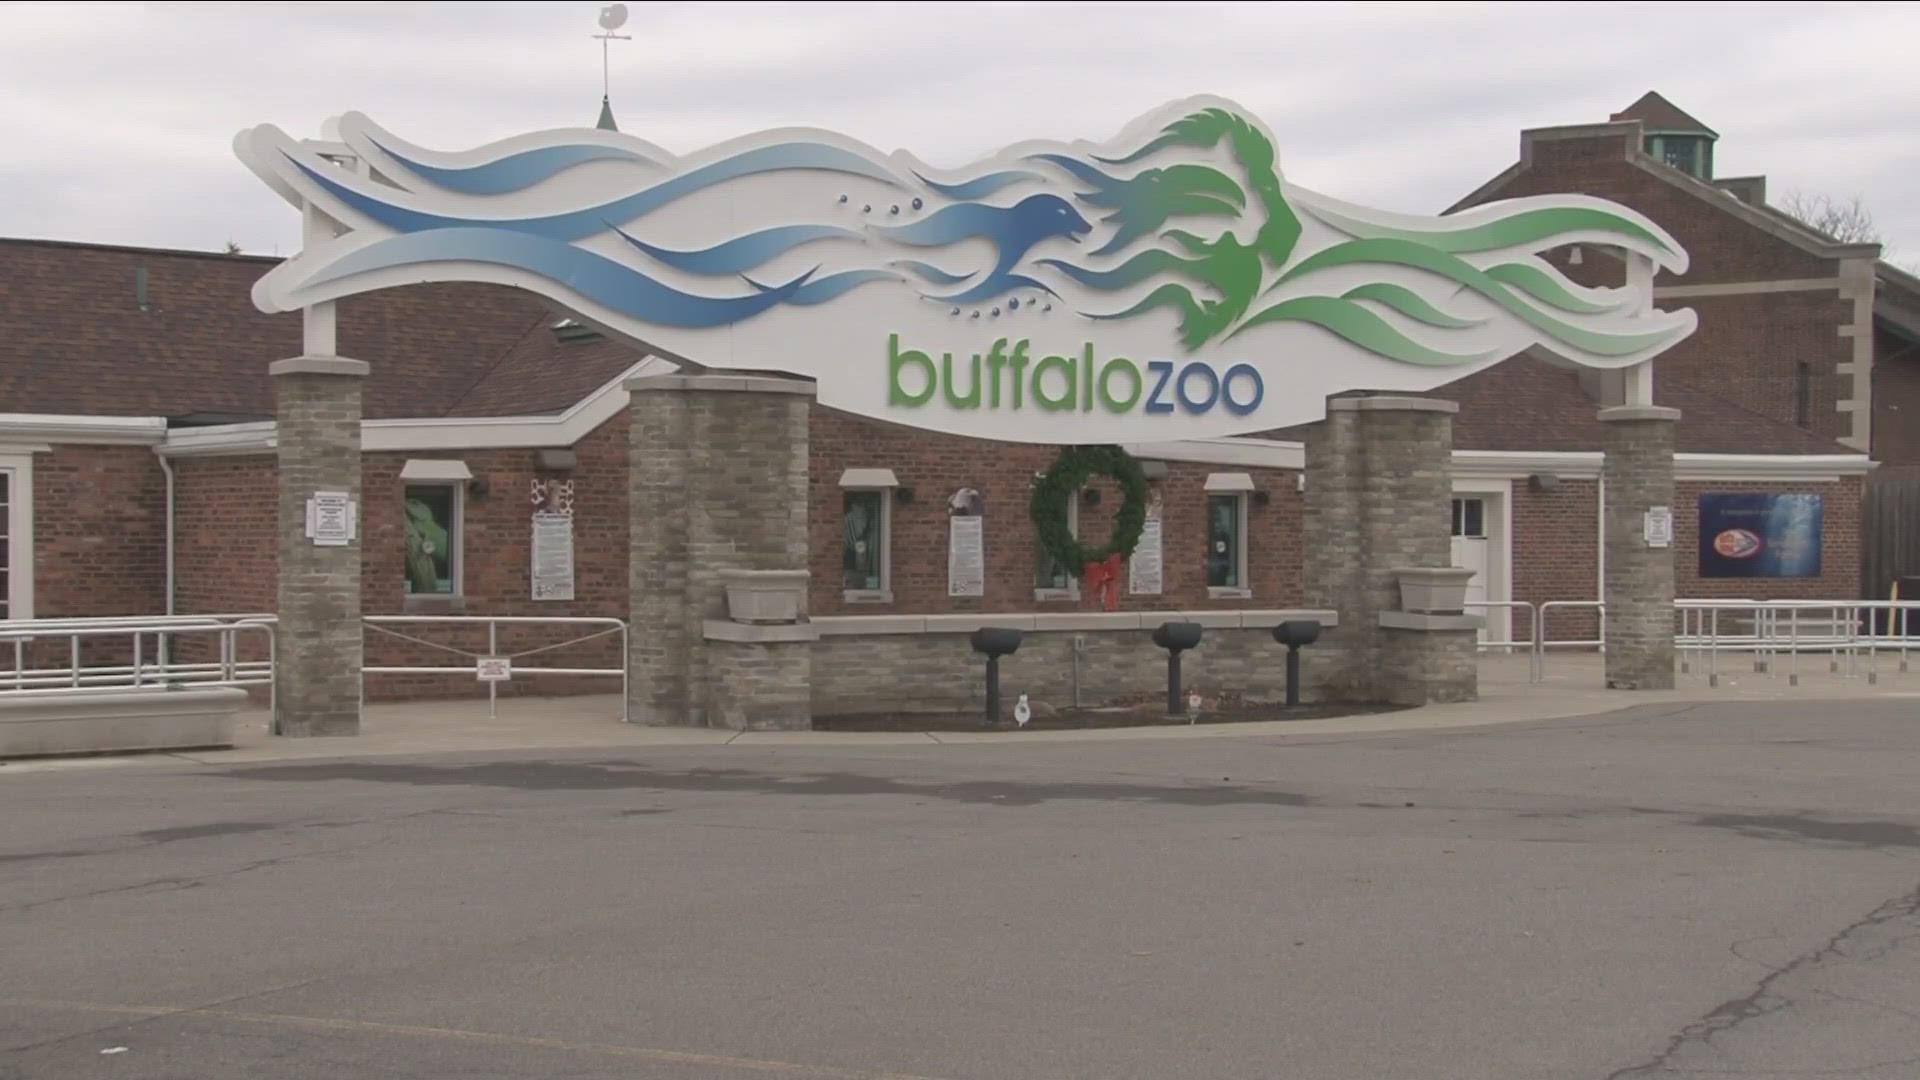 Buffalo Zoo job fair happening Saturday, March 25, 2023 from 3-7pm at the zoo